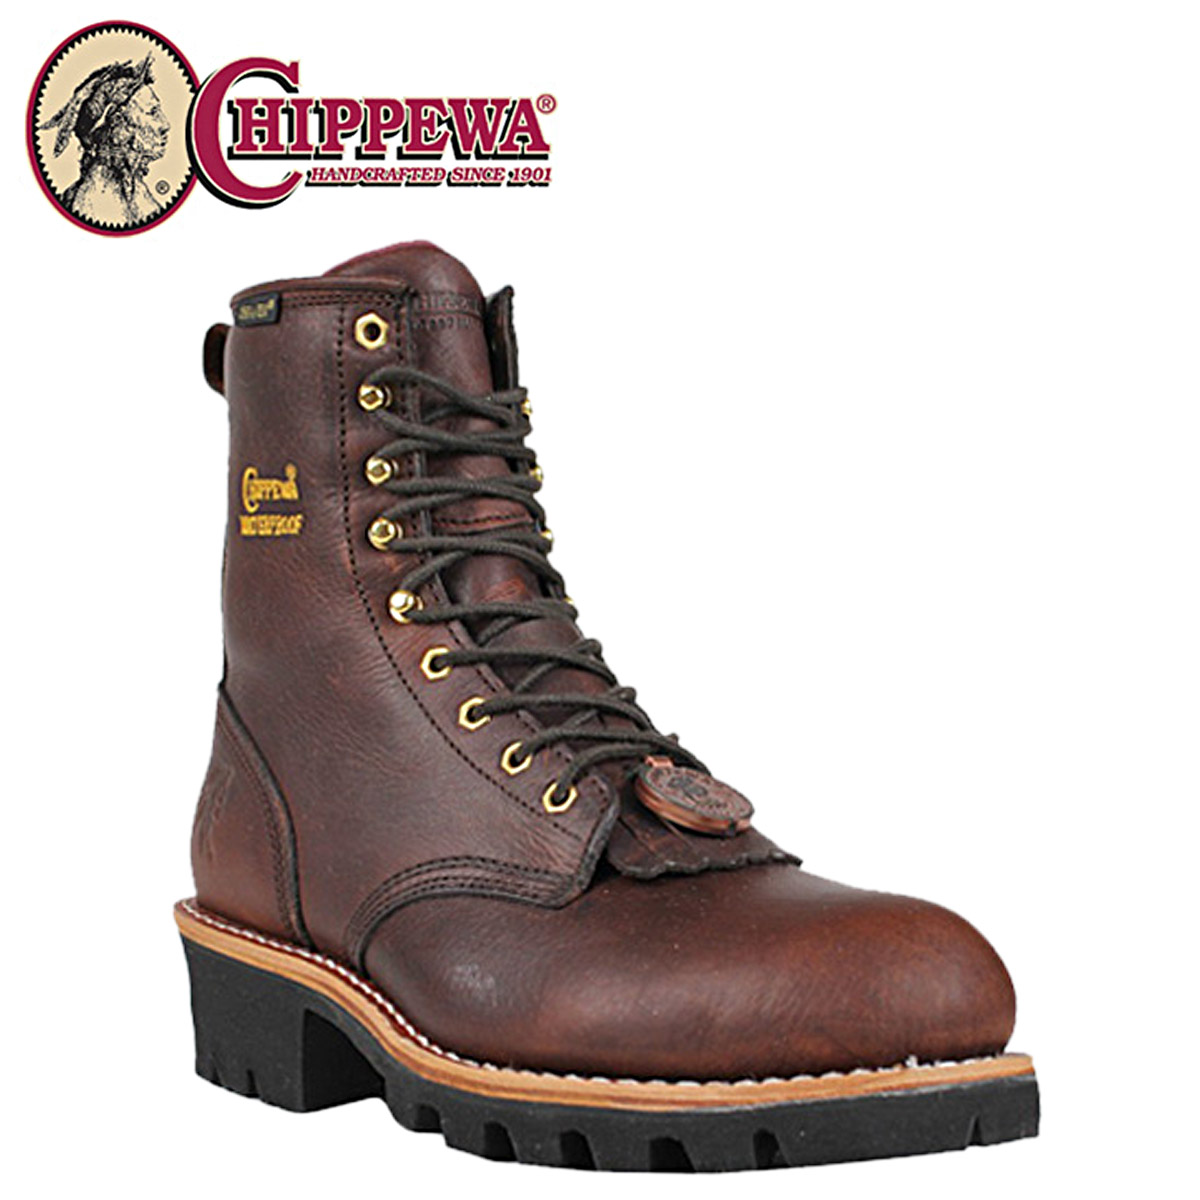 chippewa insulated work boots